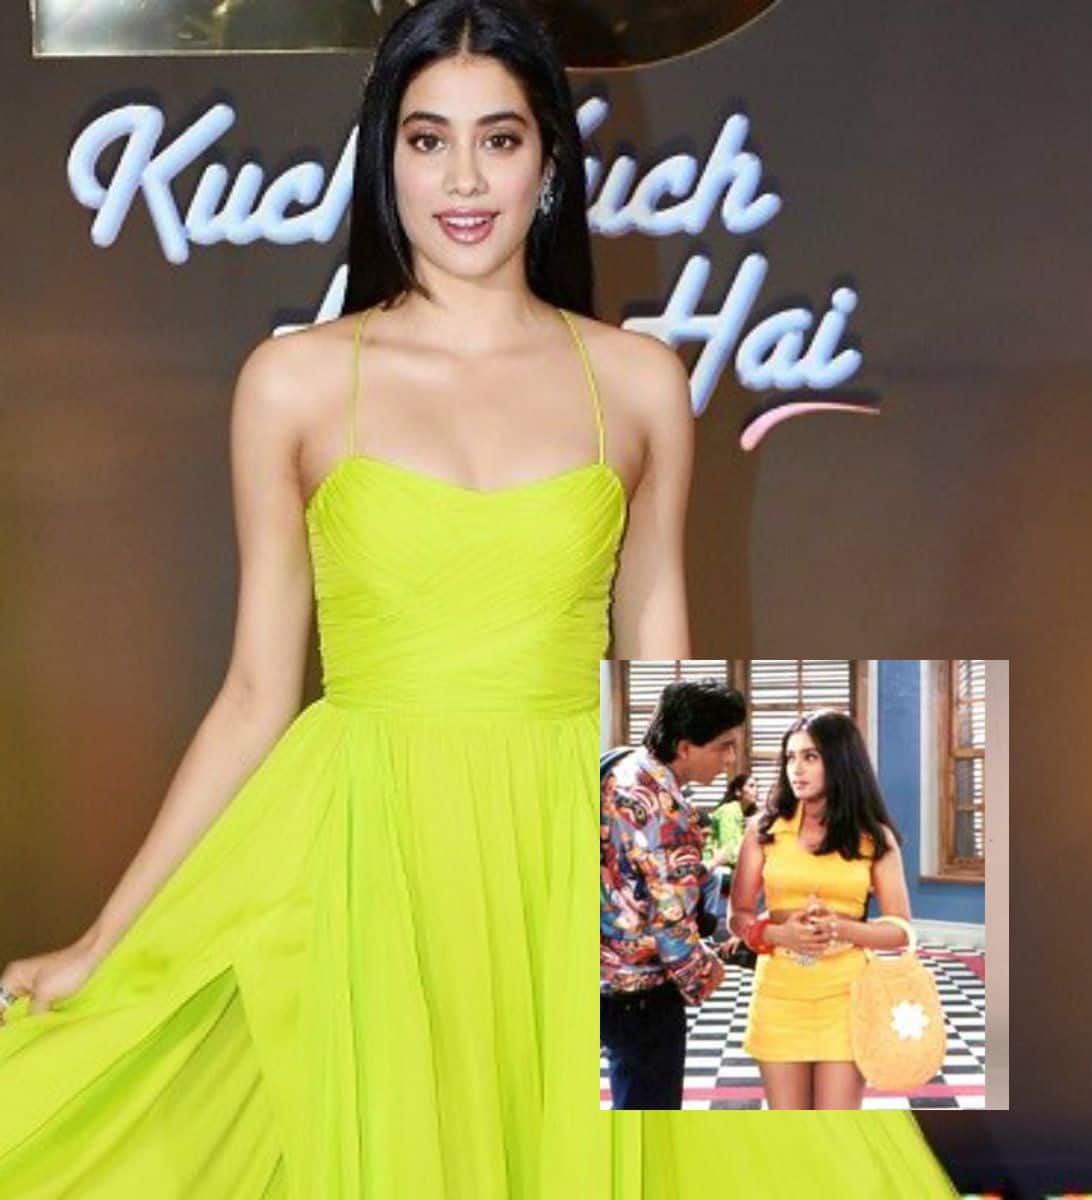 Hq Pics Kuch Kuch Hota Hai 20th Anniversary Party Janhvi Kapoor S Gown Reminds Us Of Rani Mukerji S Tina Bollywood News Gossip Movie Reviews Trailers Videos At Bollywoodlife Com